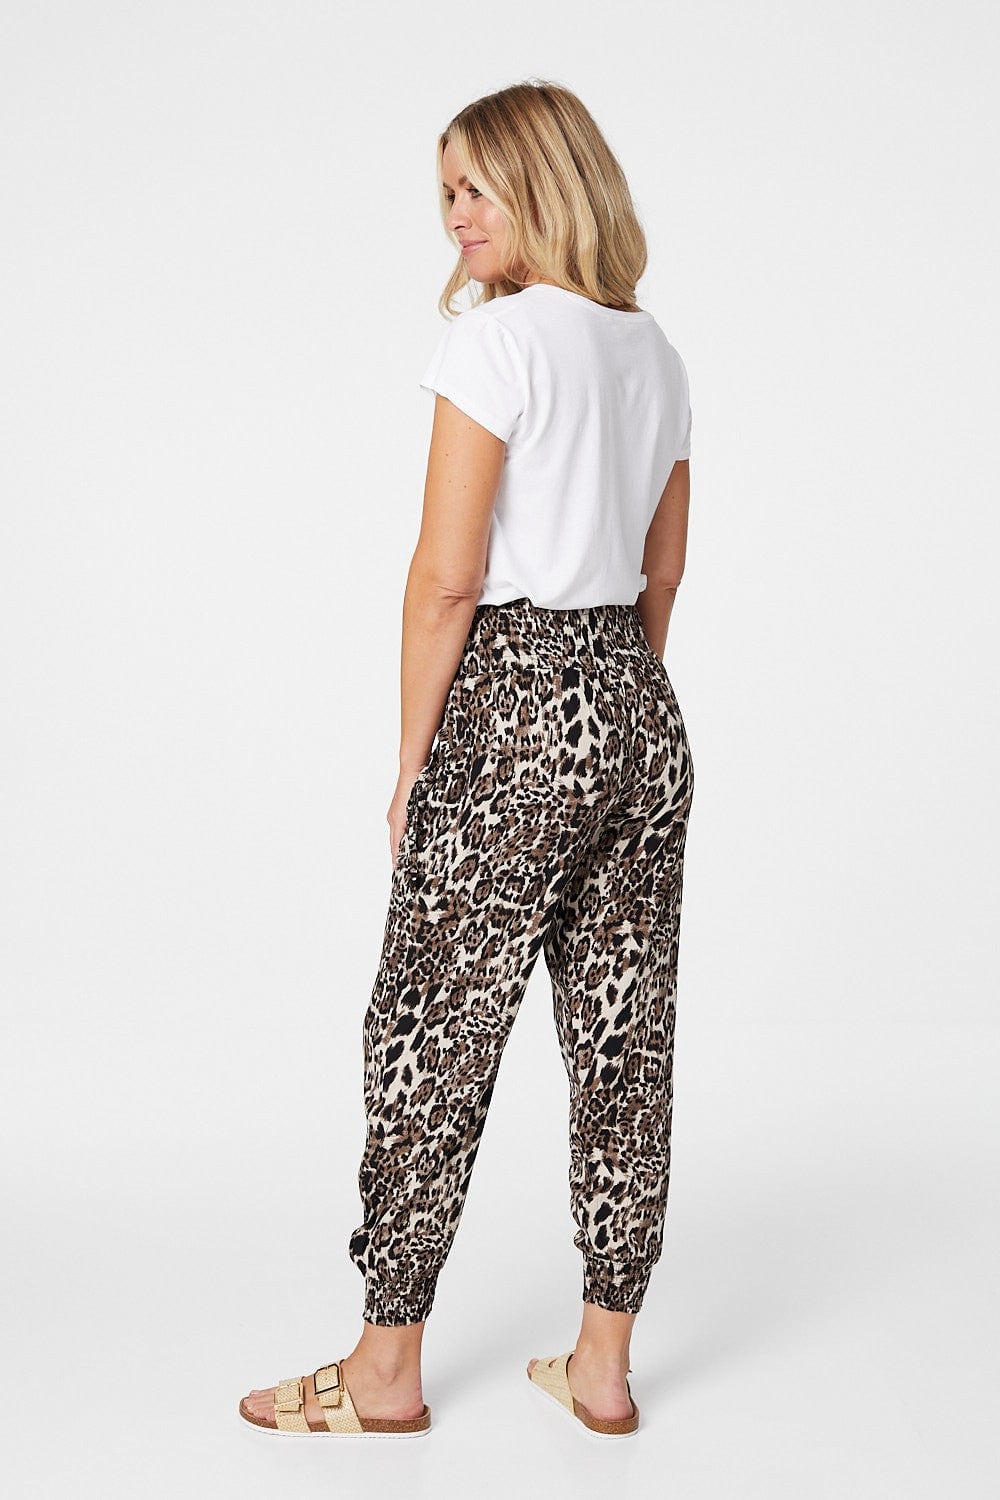 Tan | Leopard Print Harem Pants